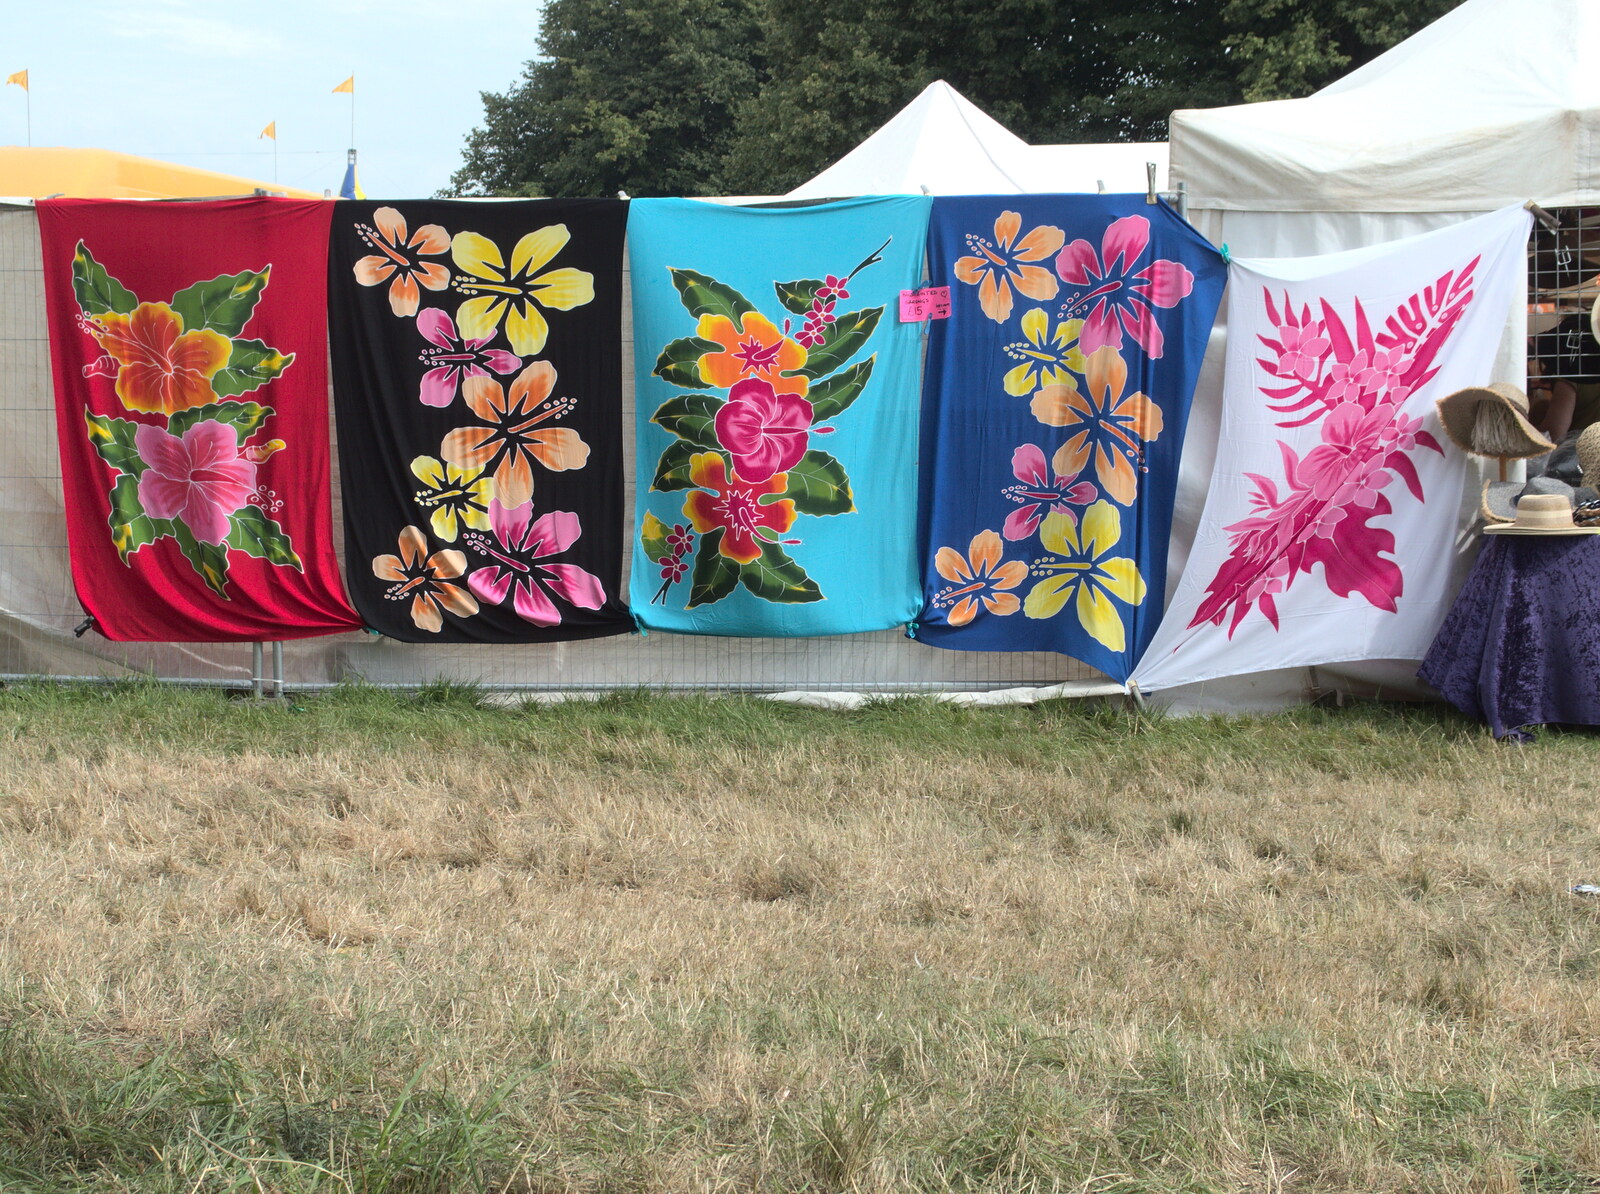 Loud towels from Latitude Festival, Henham Park, Southwold, Suffolk - 17th July 2014